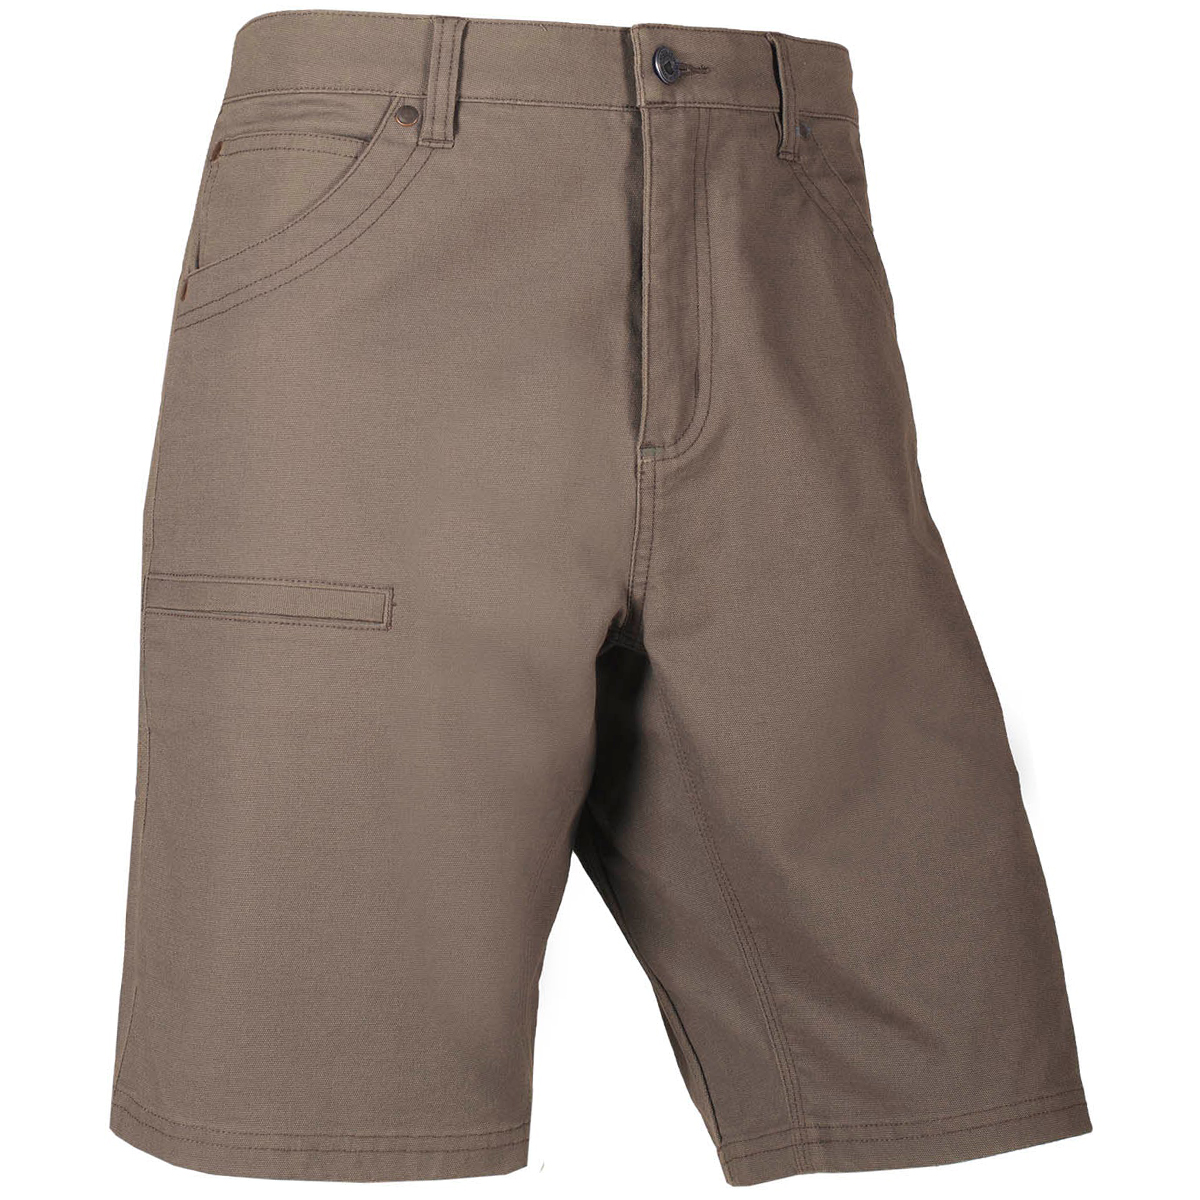 Mountain Khakis Men's Camber Original Shorts - Size 38